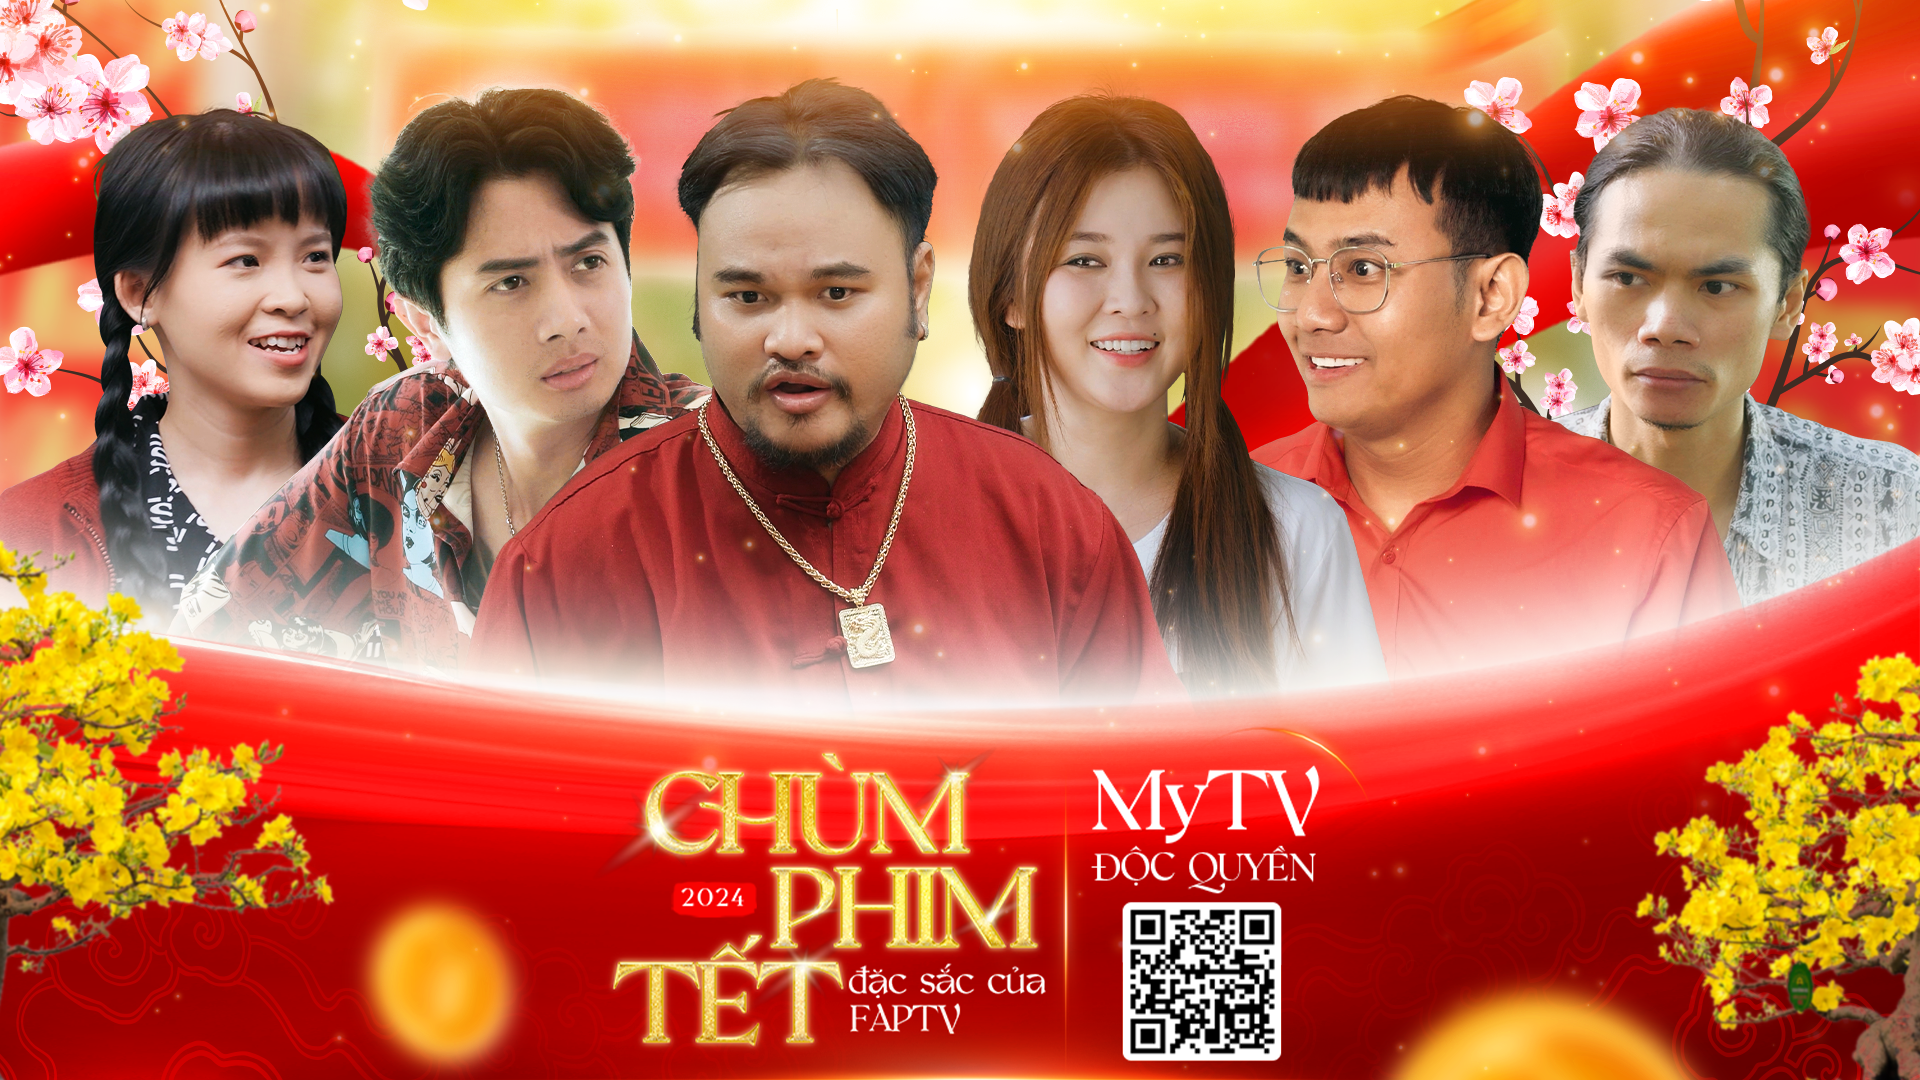 Đón Xuân Giáp Thìn - Tết xem gì hỏi MyTV